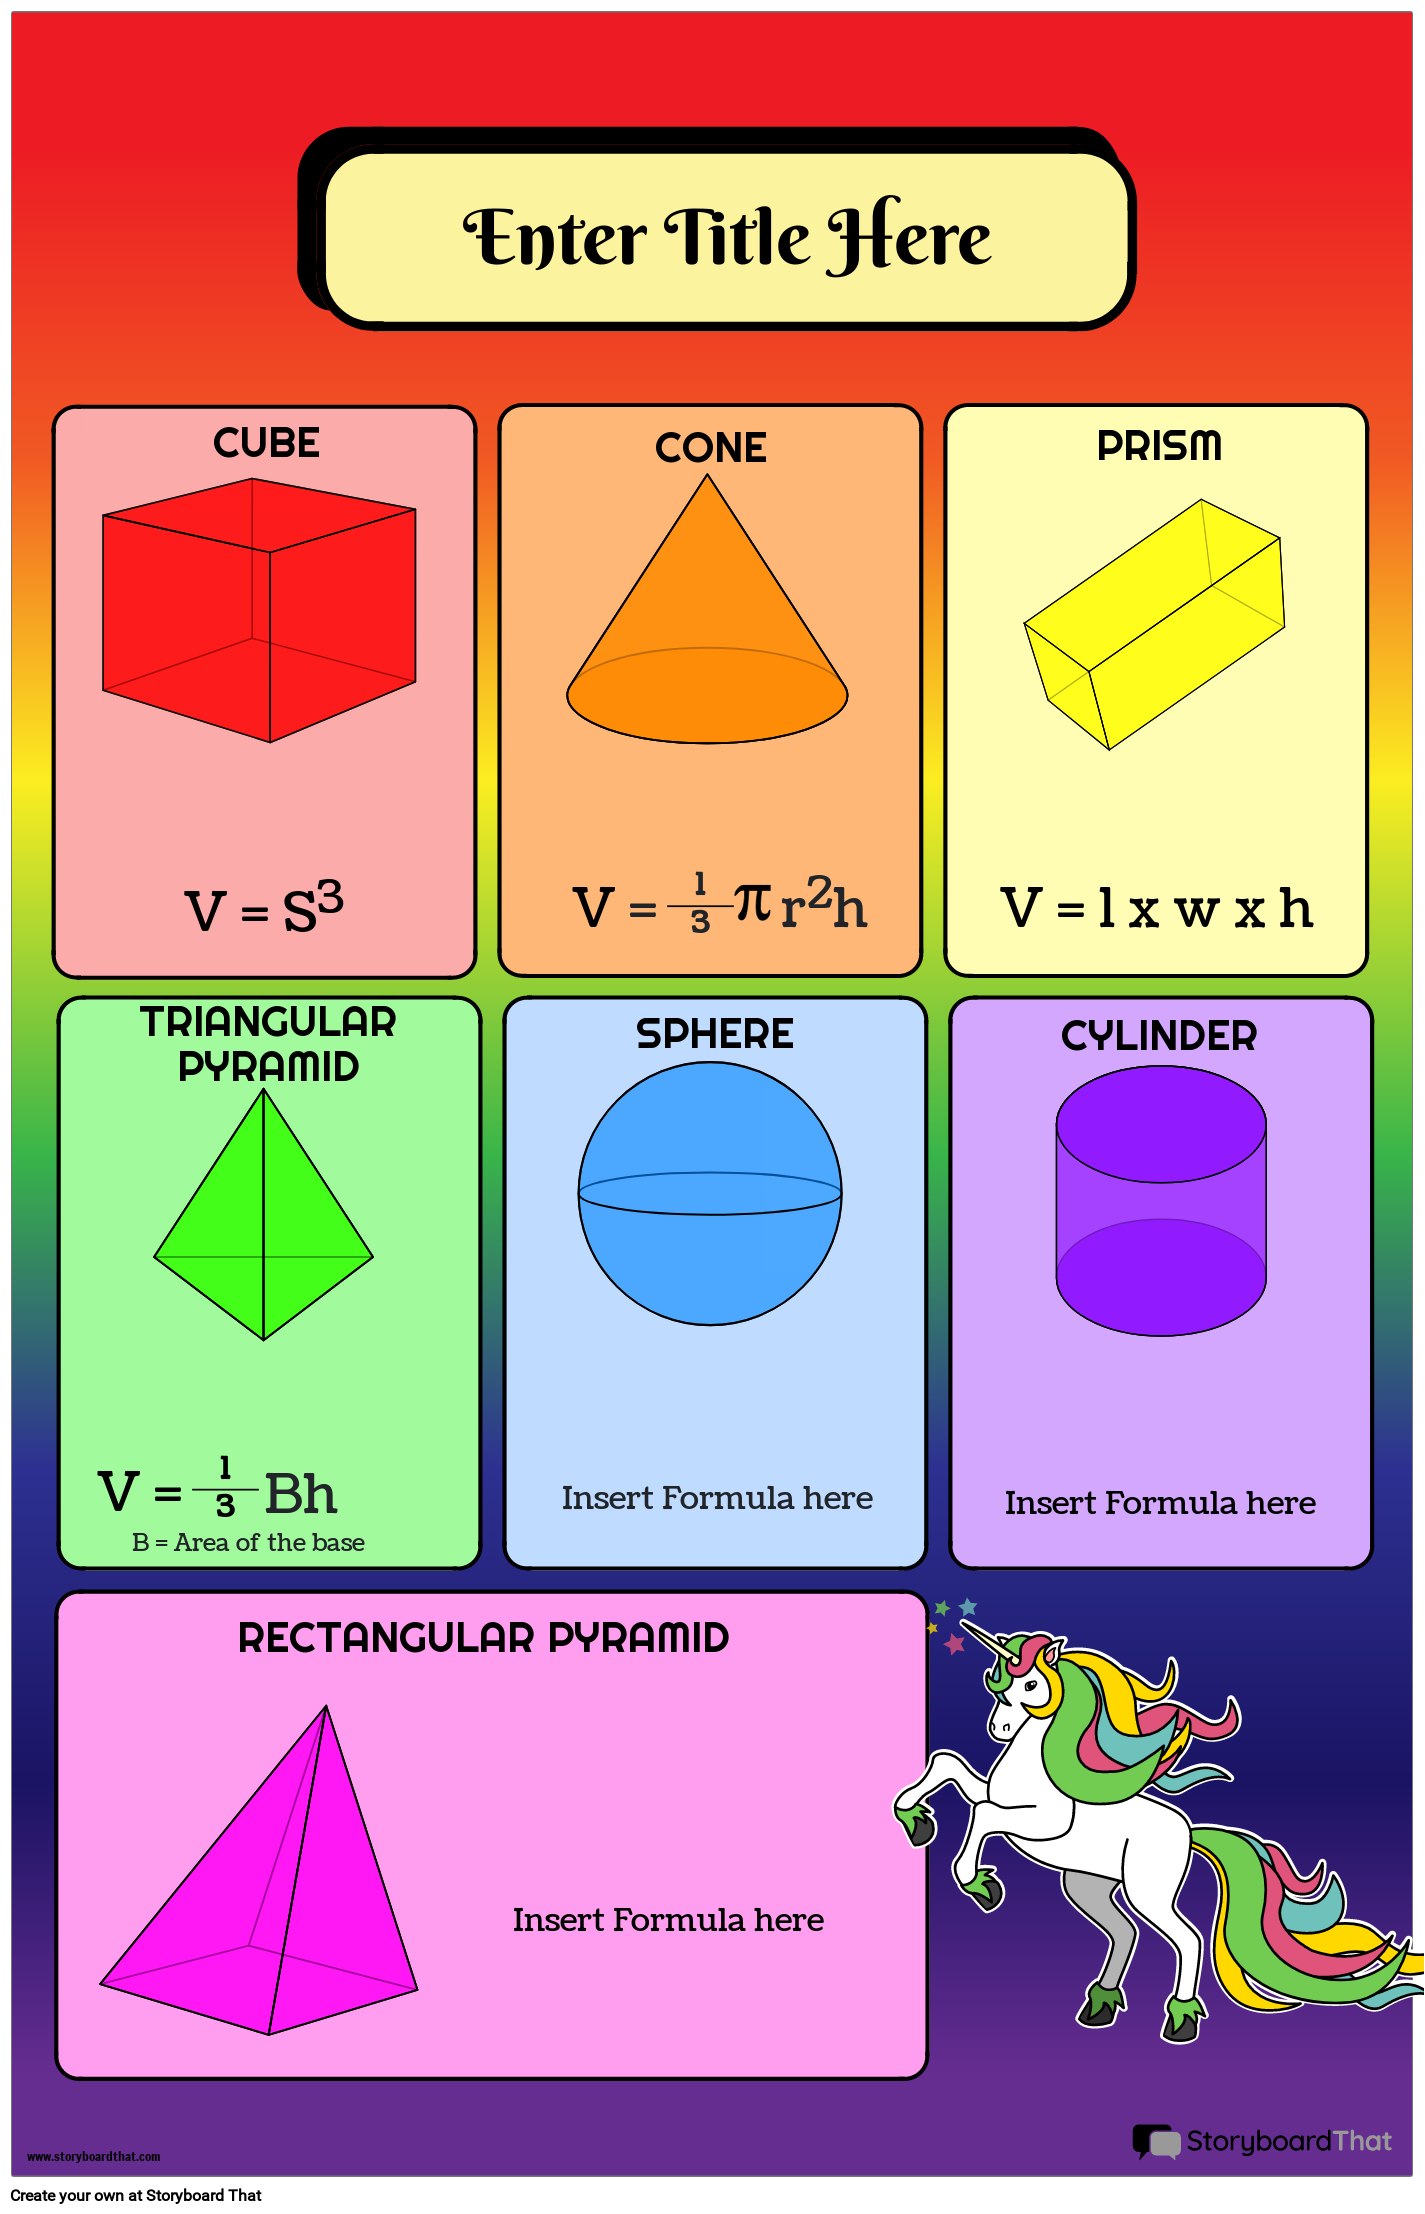 Rainbow-themed Volume maths Formulas Poster